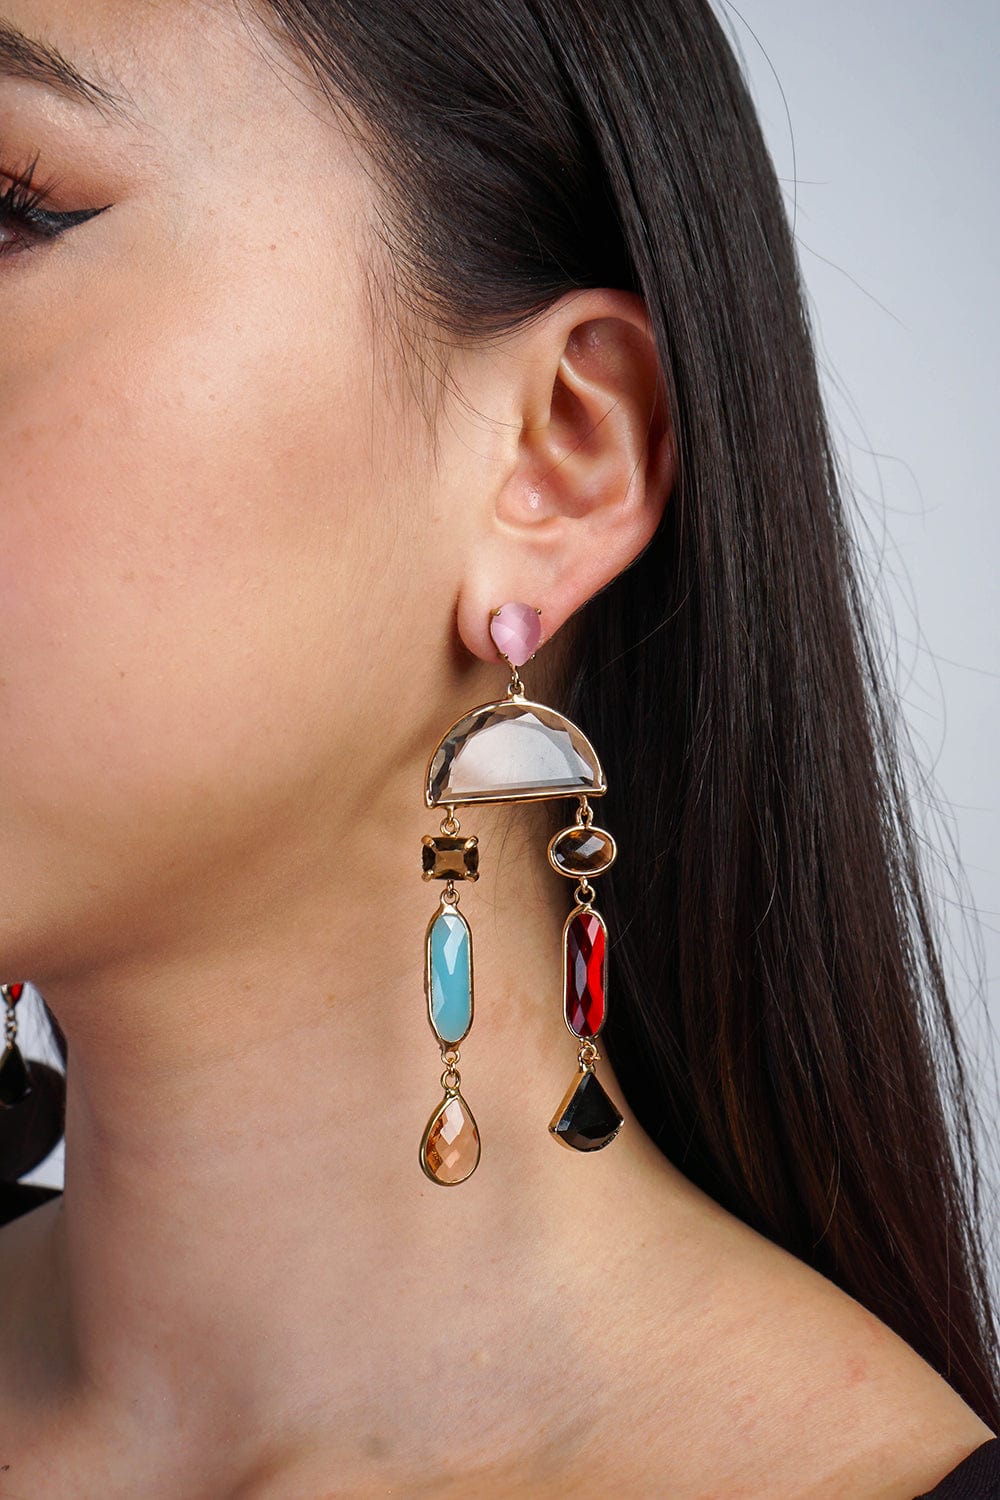 DCD EARRINGS Multicolored Crystals Dangle Earrings